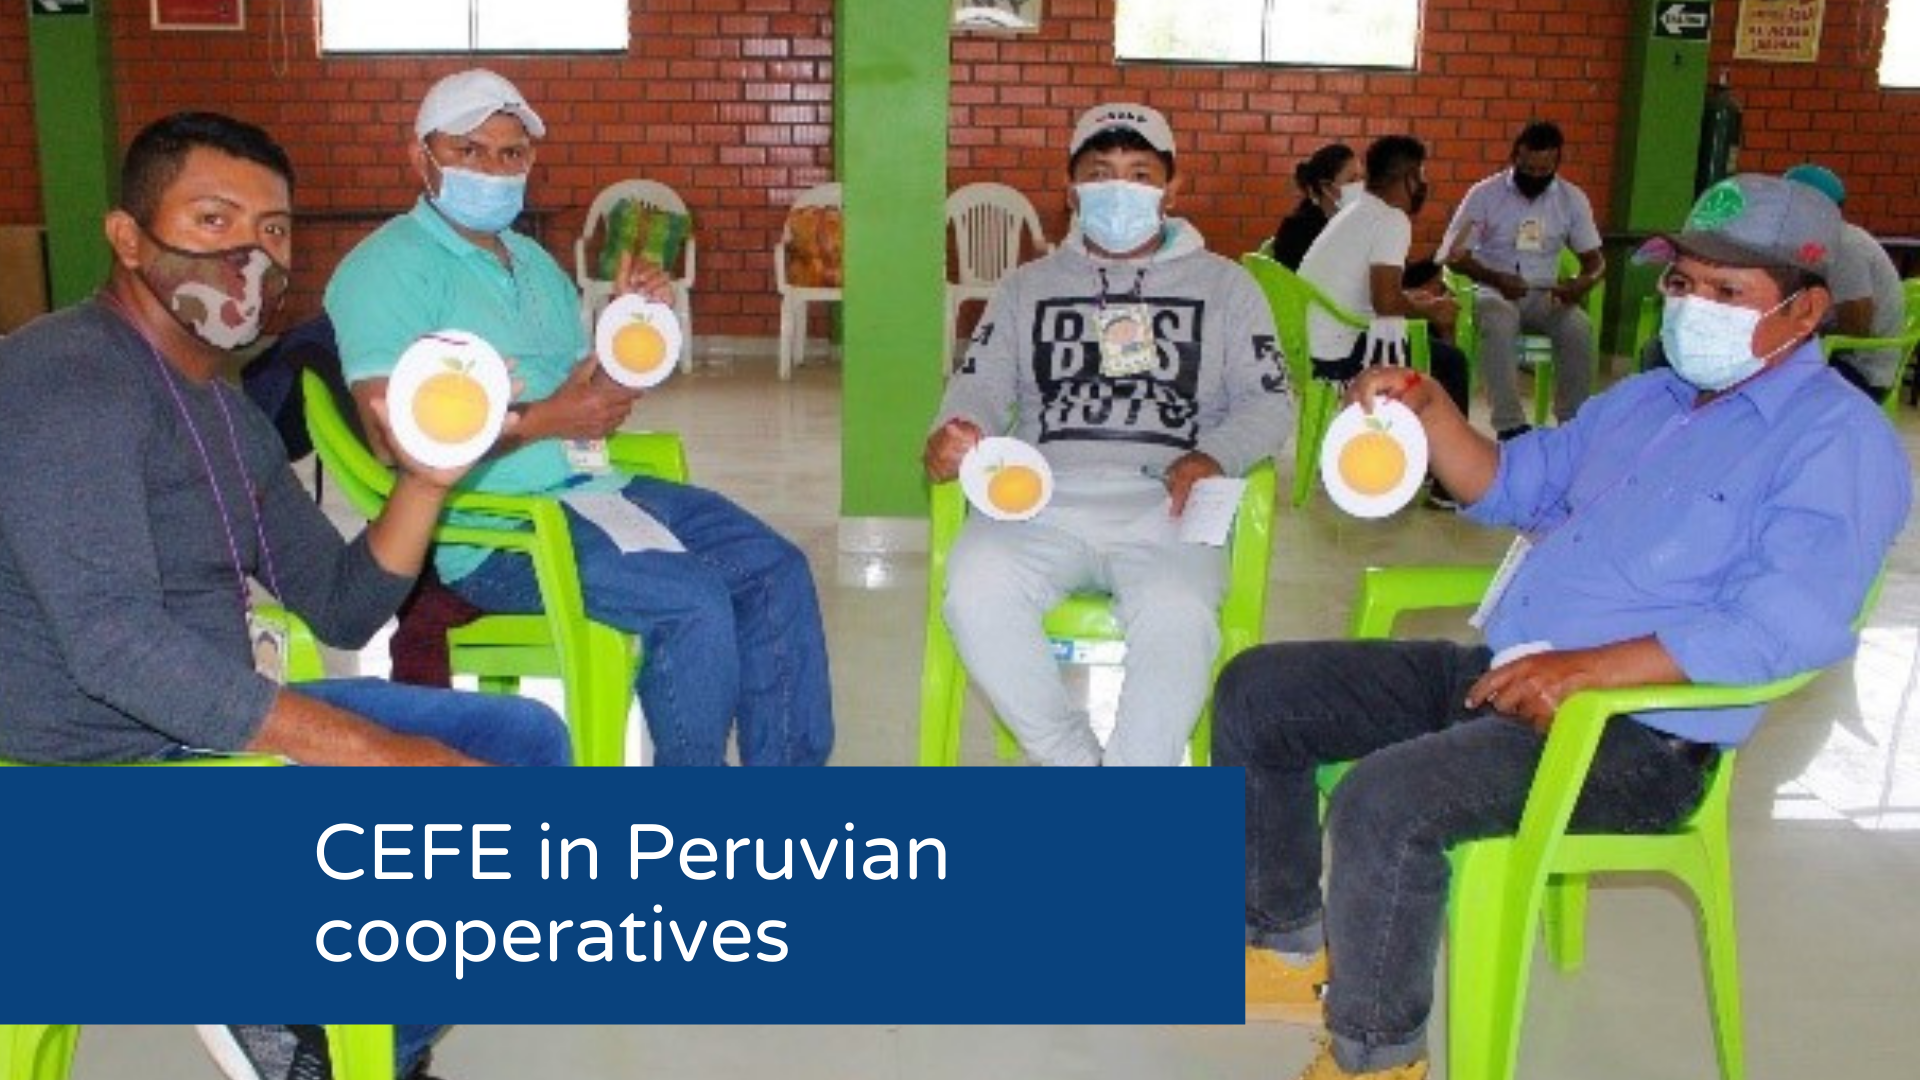 CEFE in Peruvian cooperatives